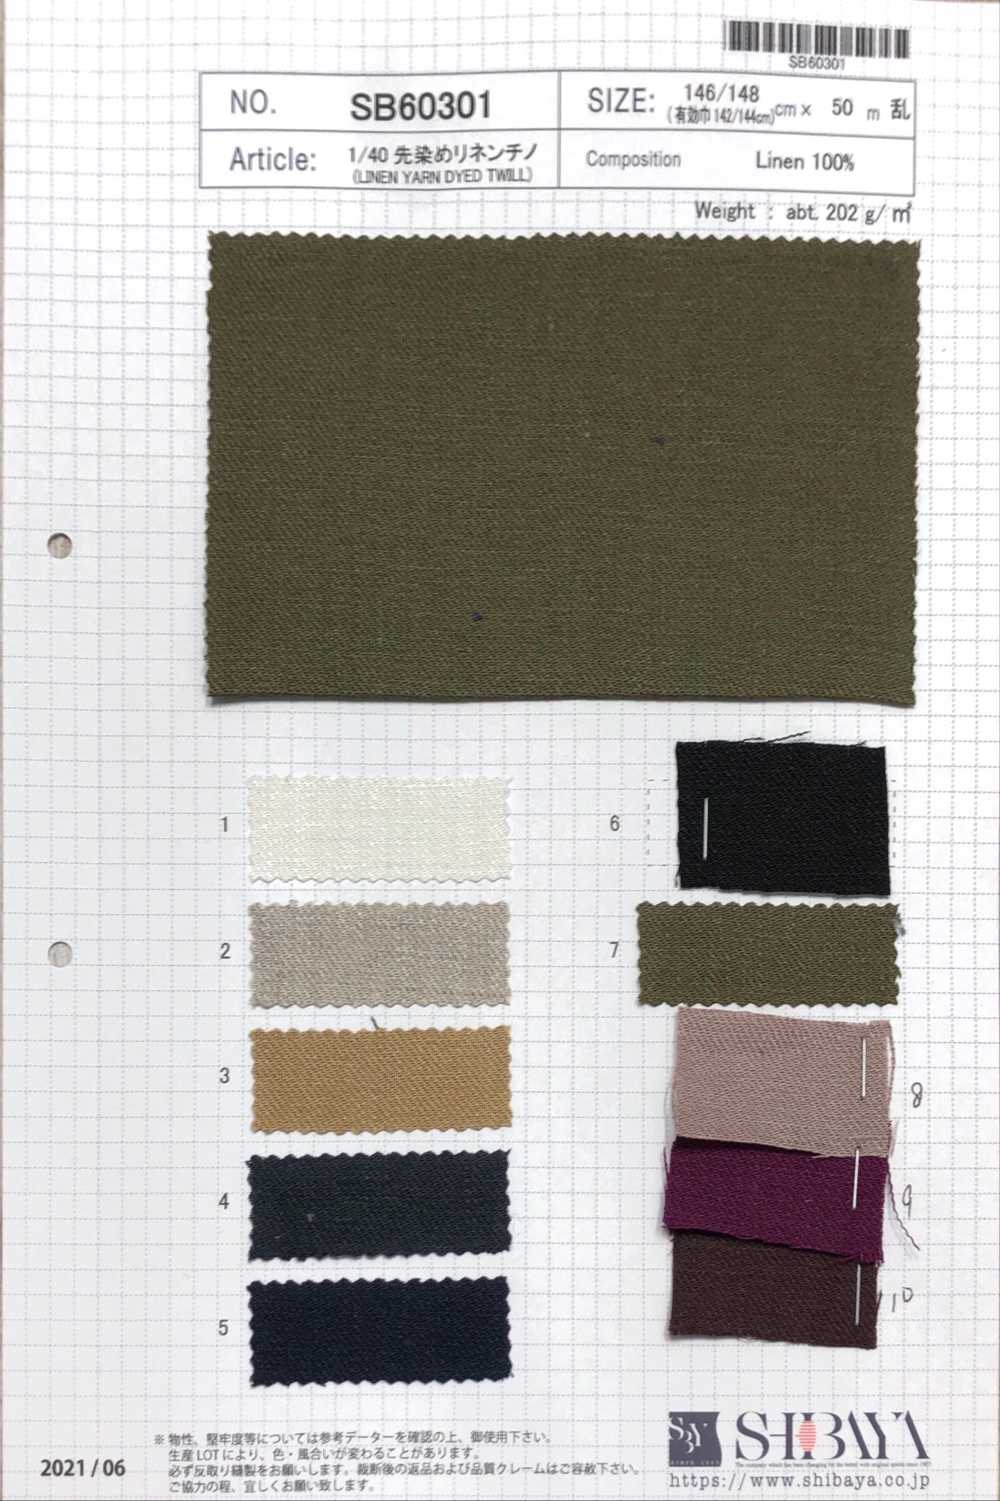 SB60301 1/40 Yarn Dyed Linen Chino[Textile / Fabric] SHIBAYA